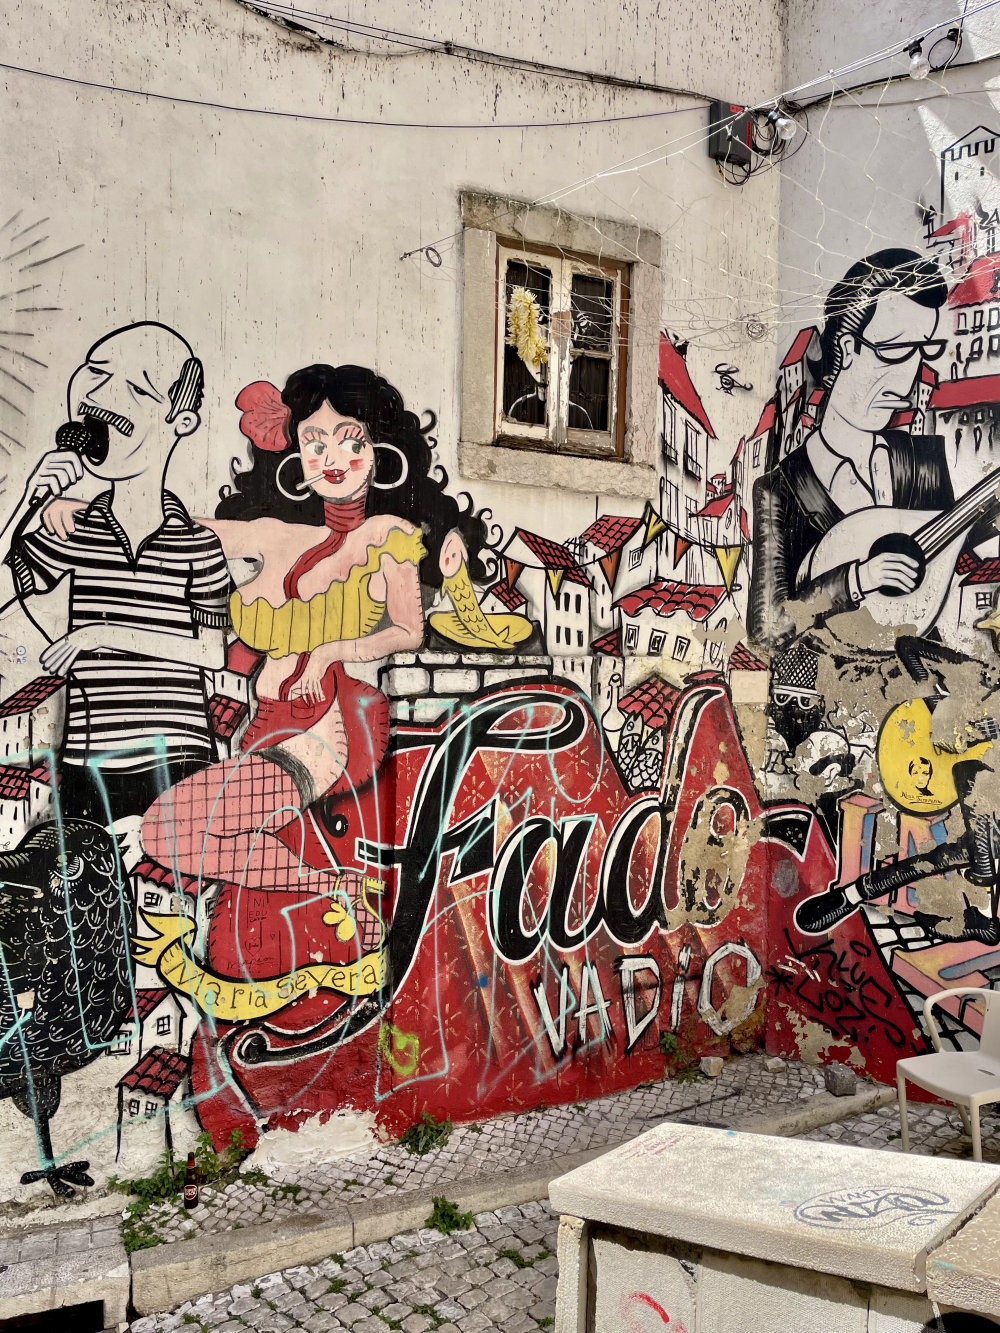 mural in Lisboa by artist unknown.